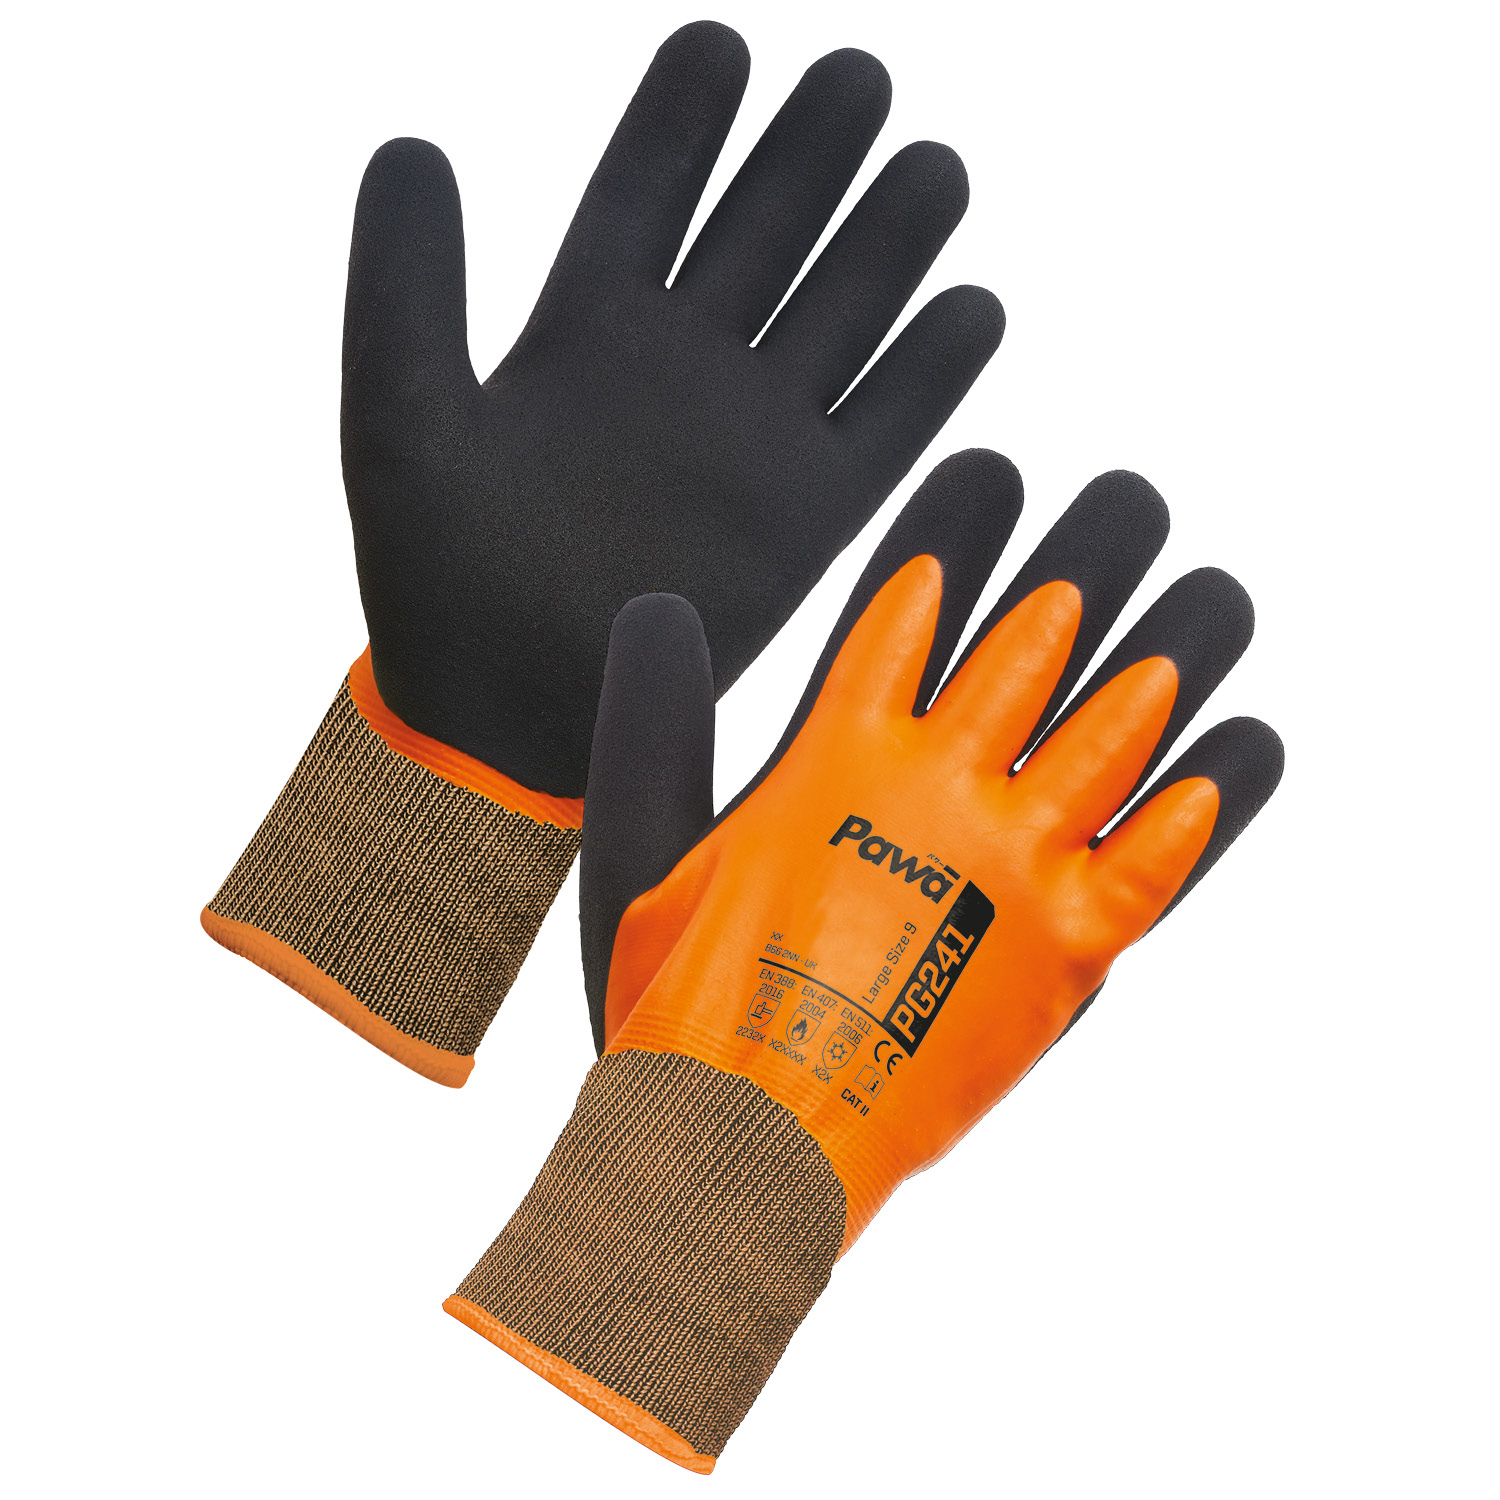 Pawa Gloves 241 - Medium